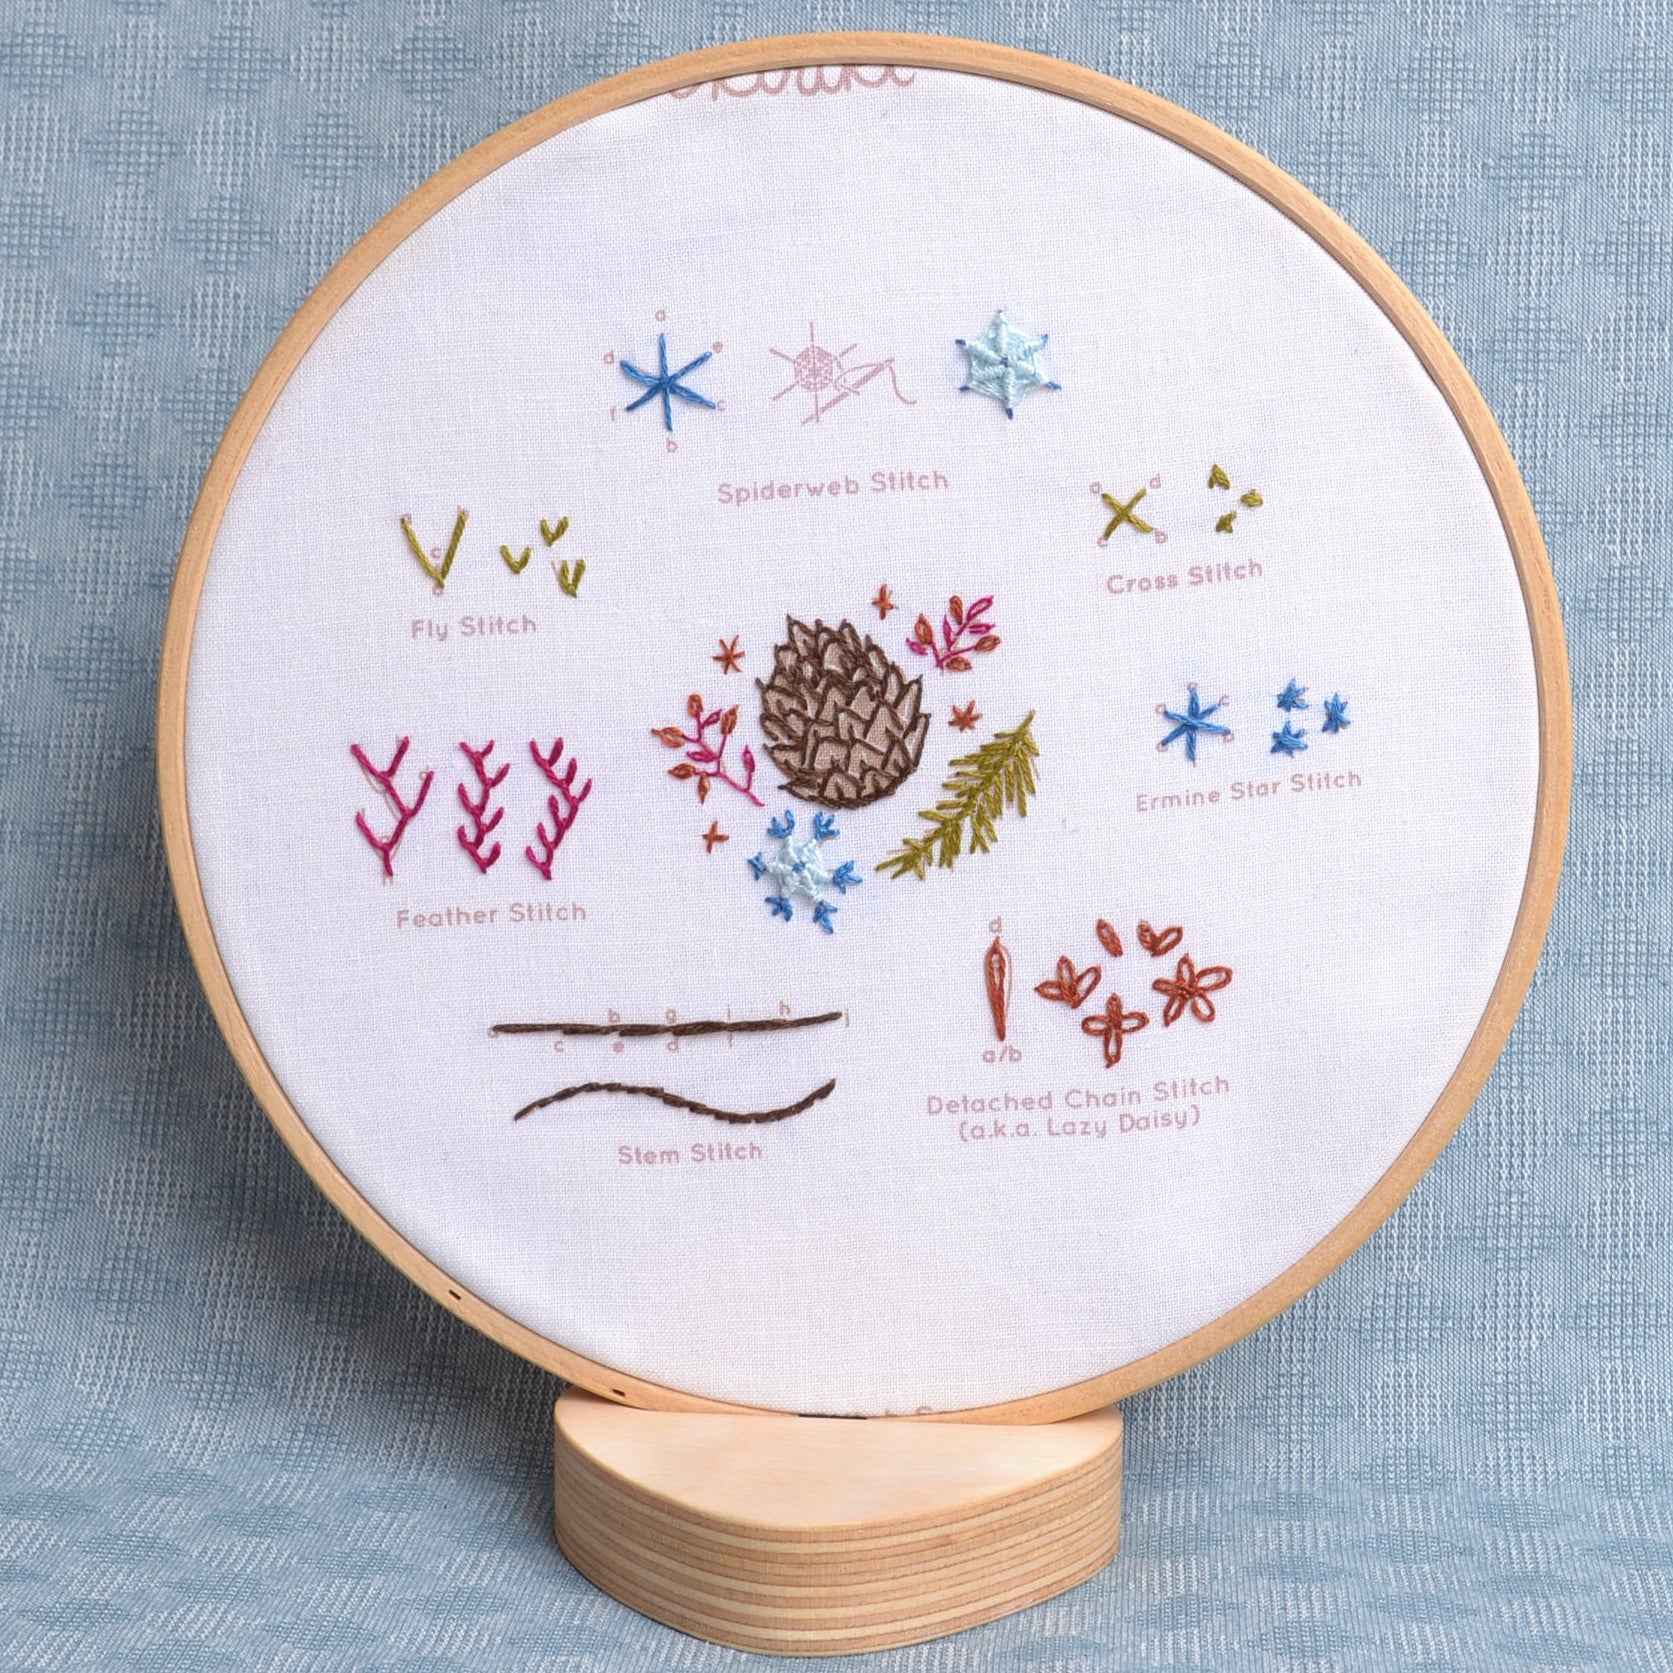 Embroidery sampler shown in hoop prop